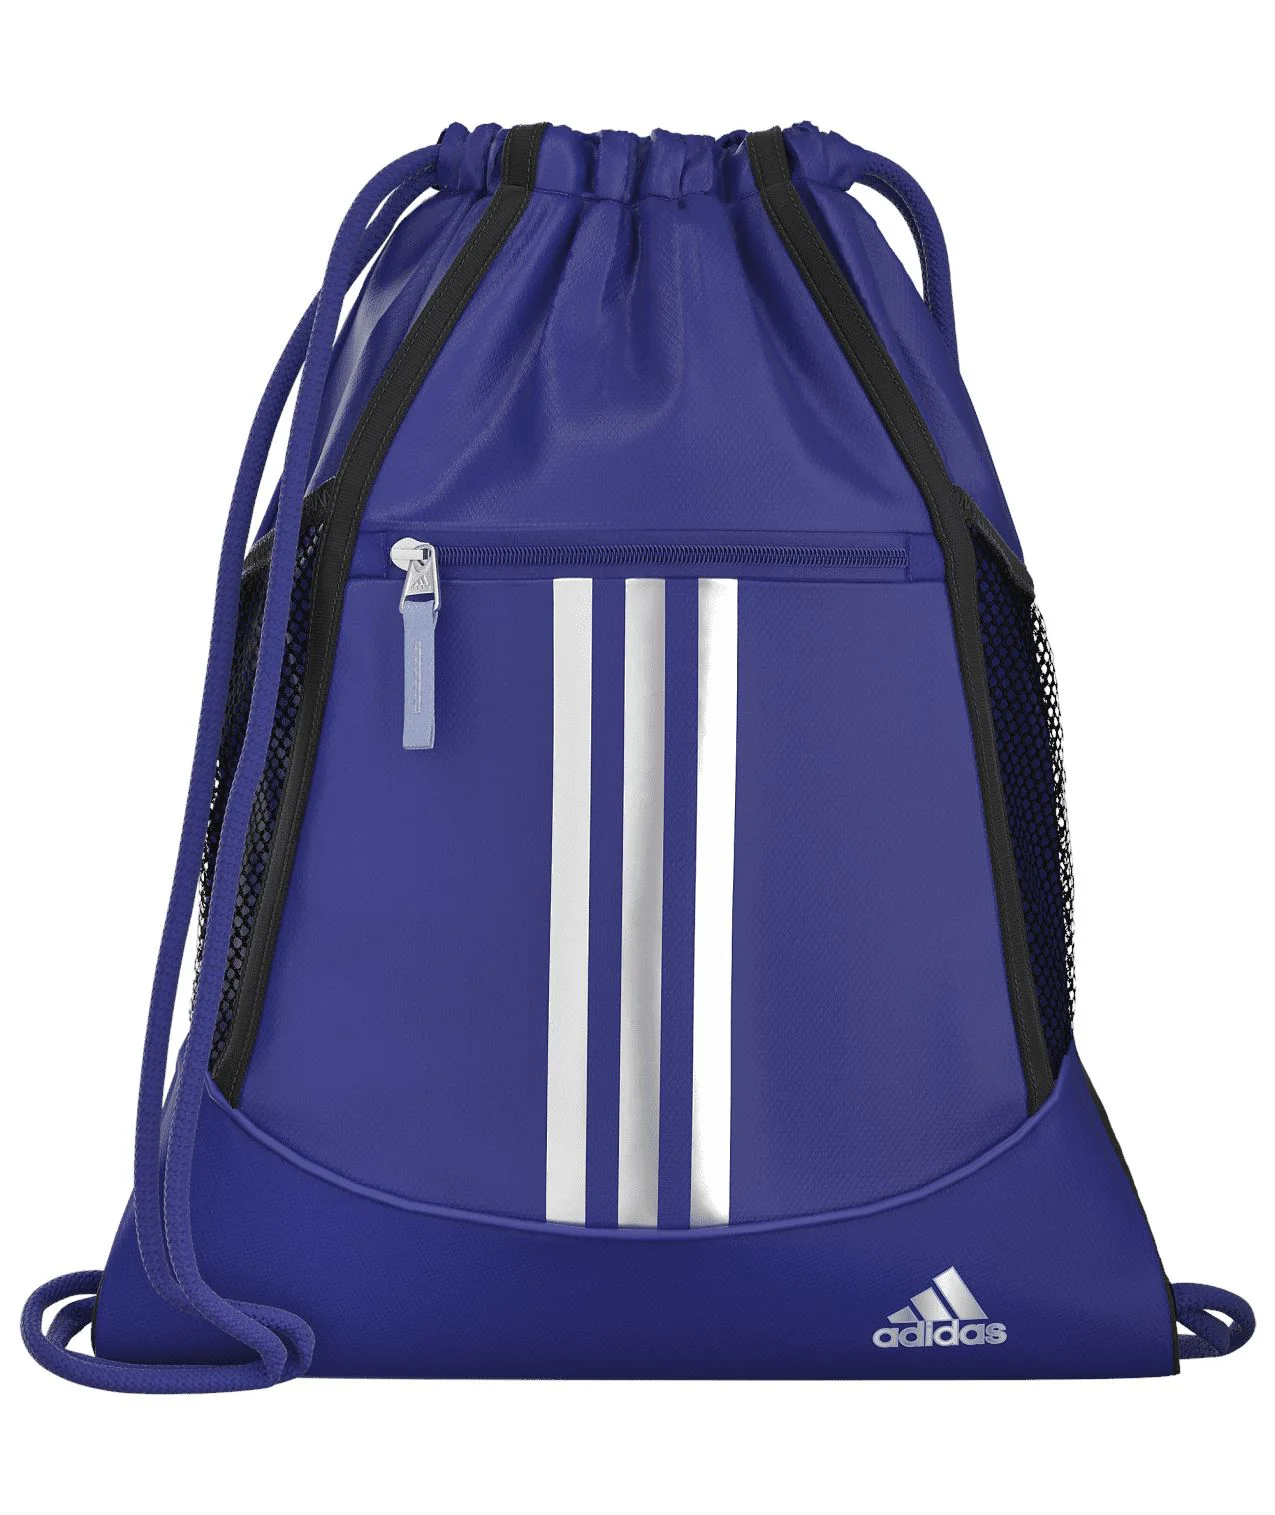 Adidas Alliance II Sackpack - BLUES/SILVER